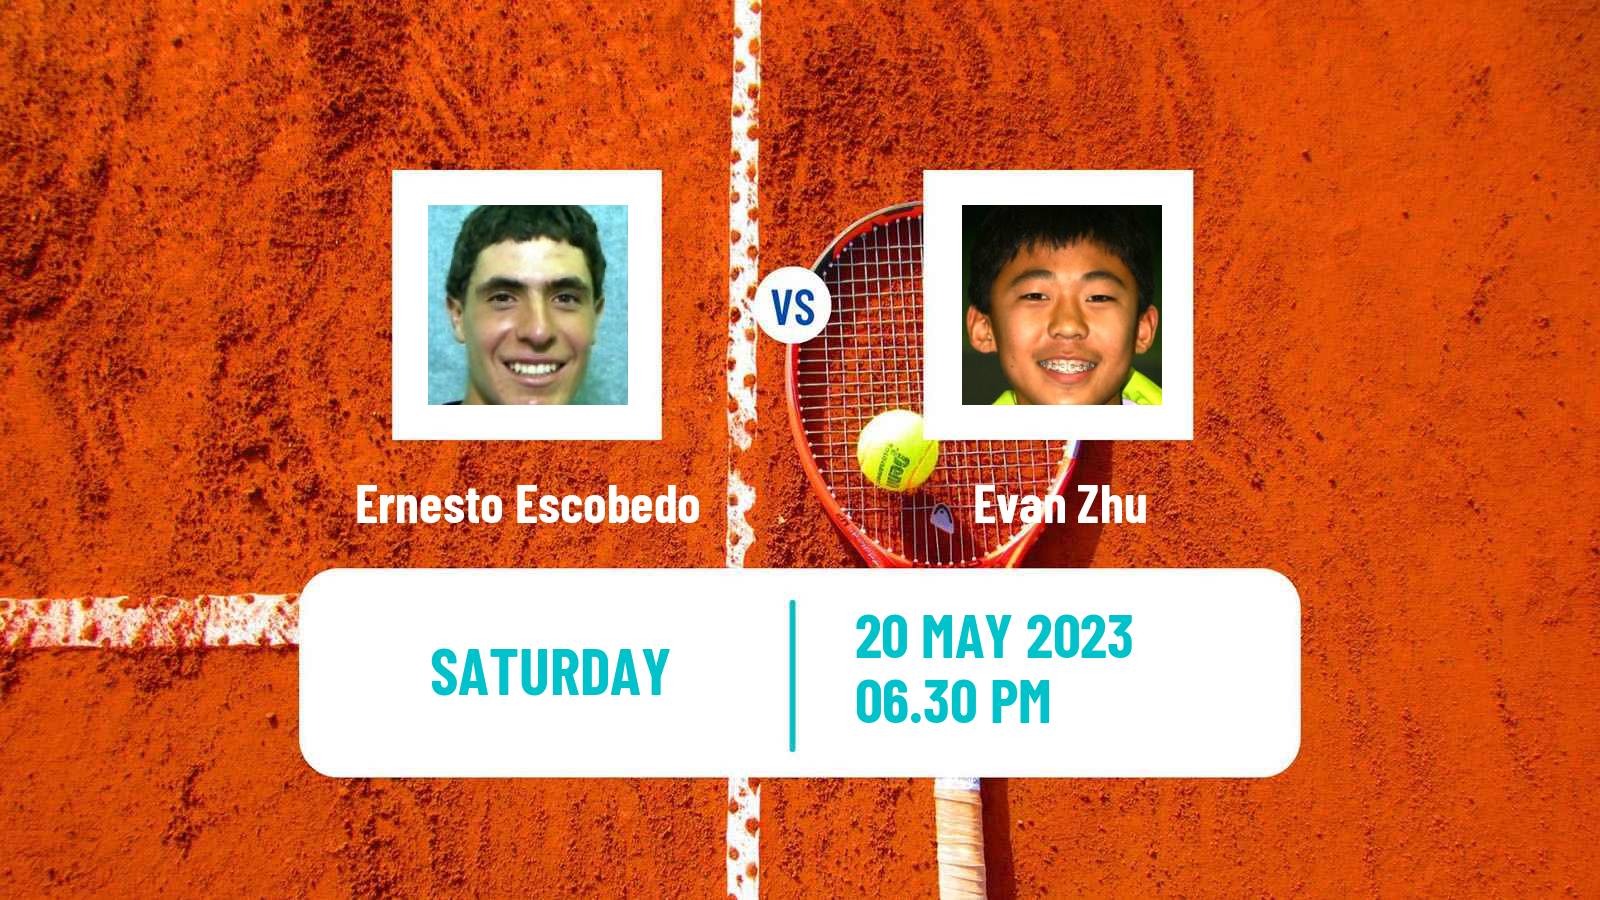 Tennis ITF M25 Xalapa Men Ernesto Escobedo - Evan Zhu